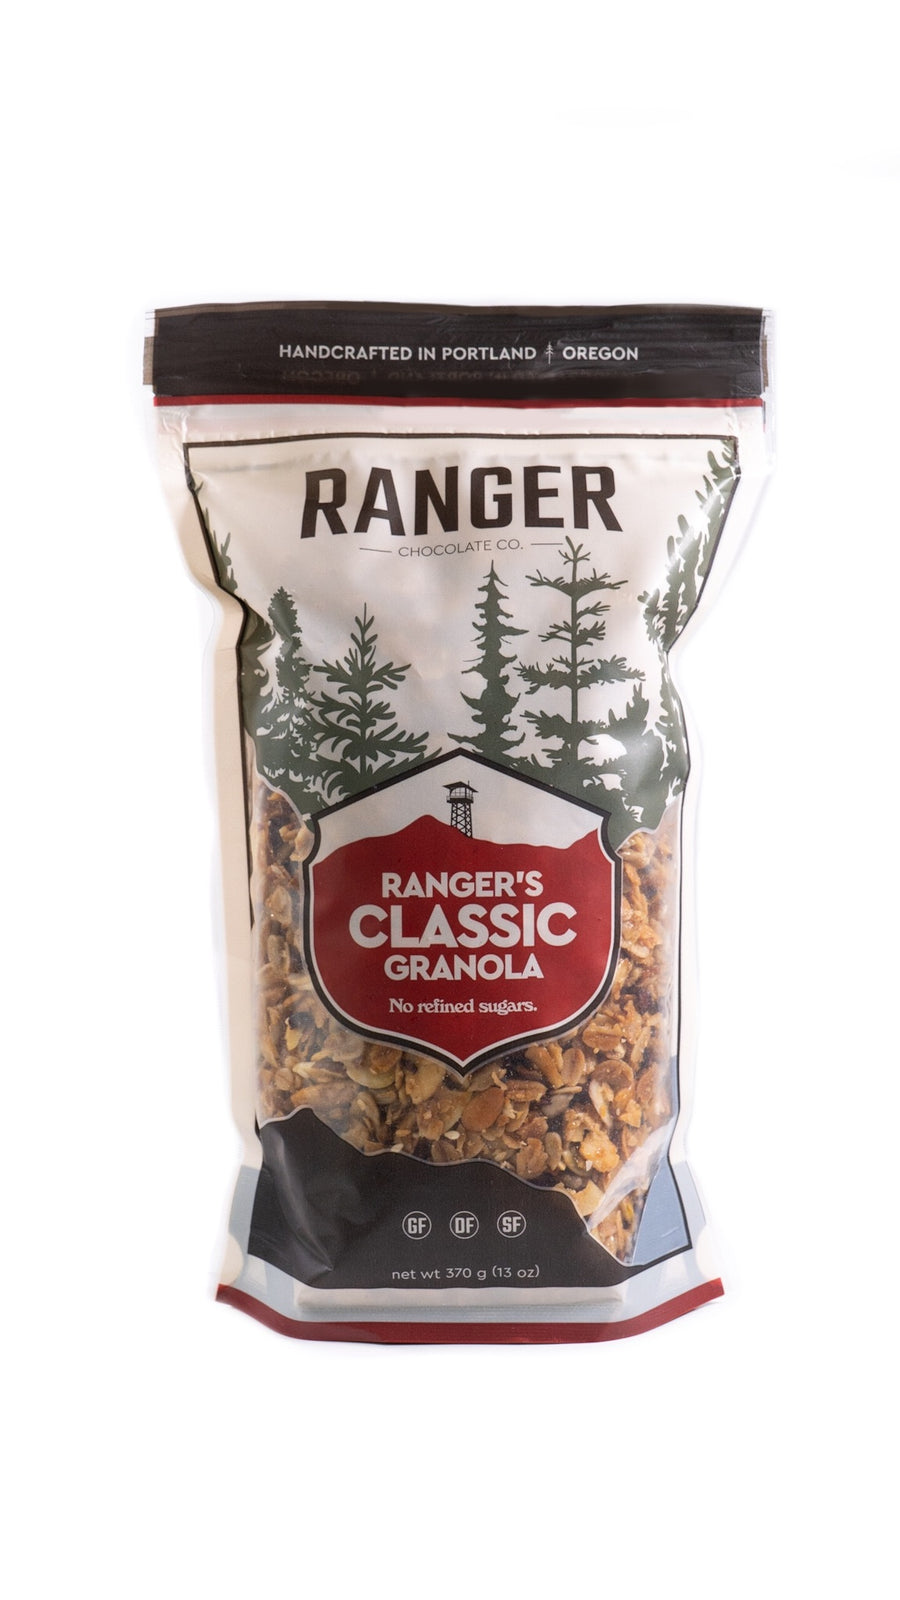 Classic Granola 14oz by Ranger Chocolate